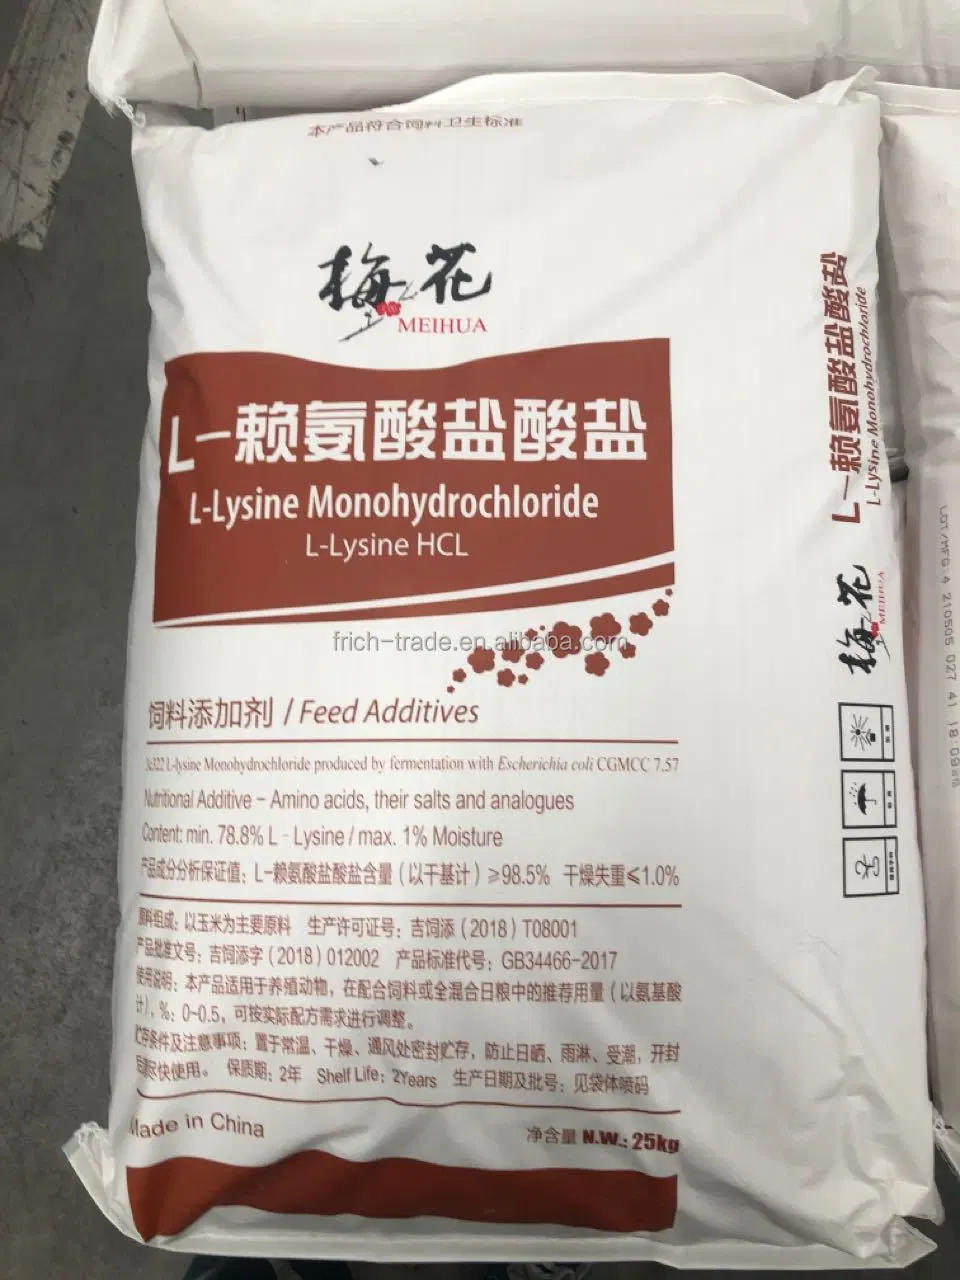 Meihua/Golden Corn/Eppen/Fufeng Brand Amino Acids 98.5% L-Lysine HCl